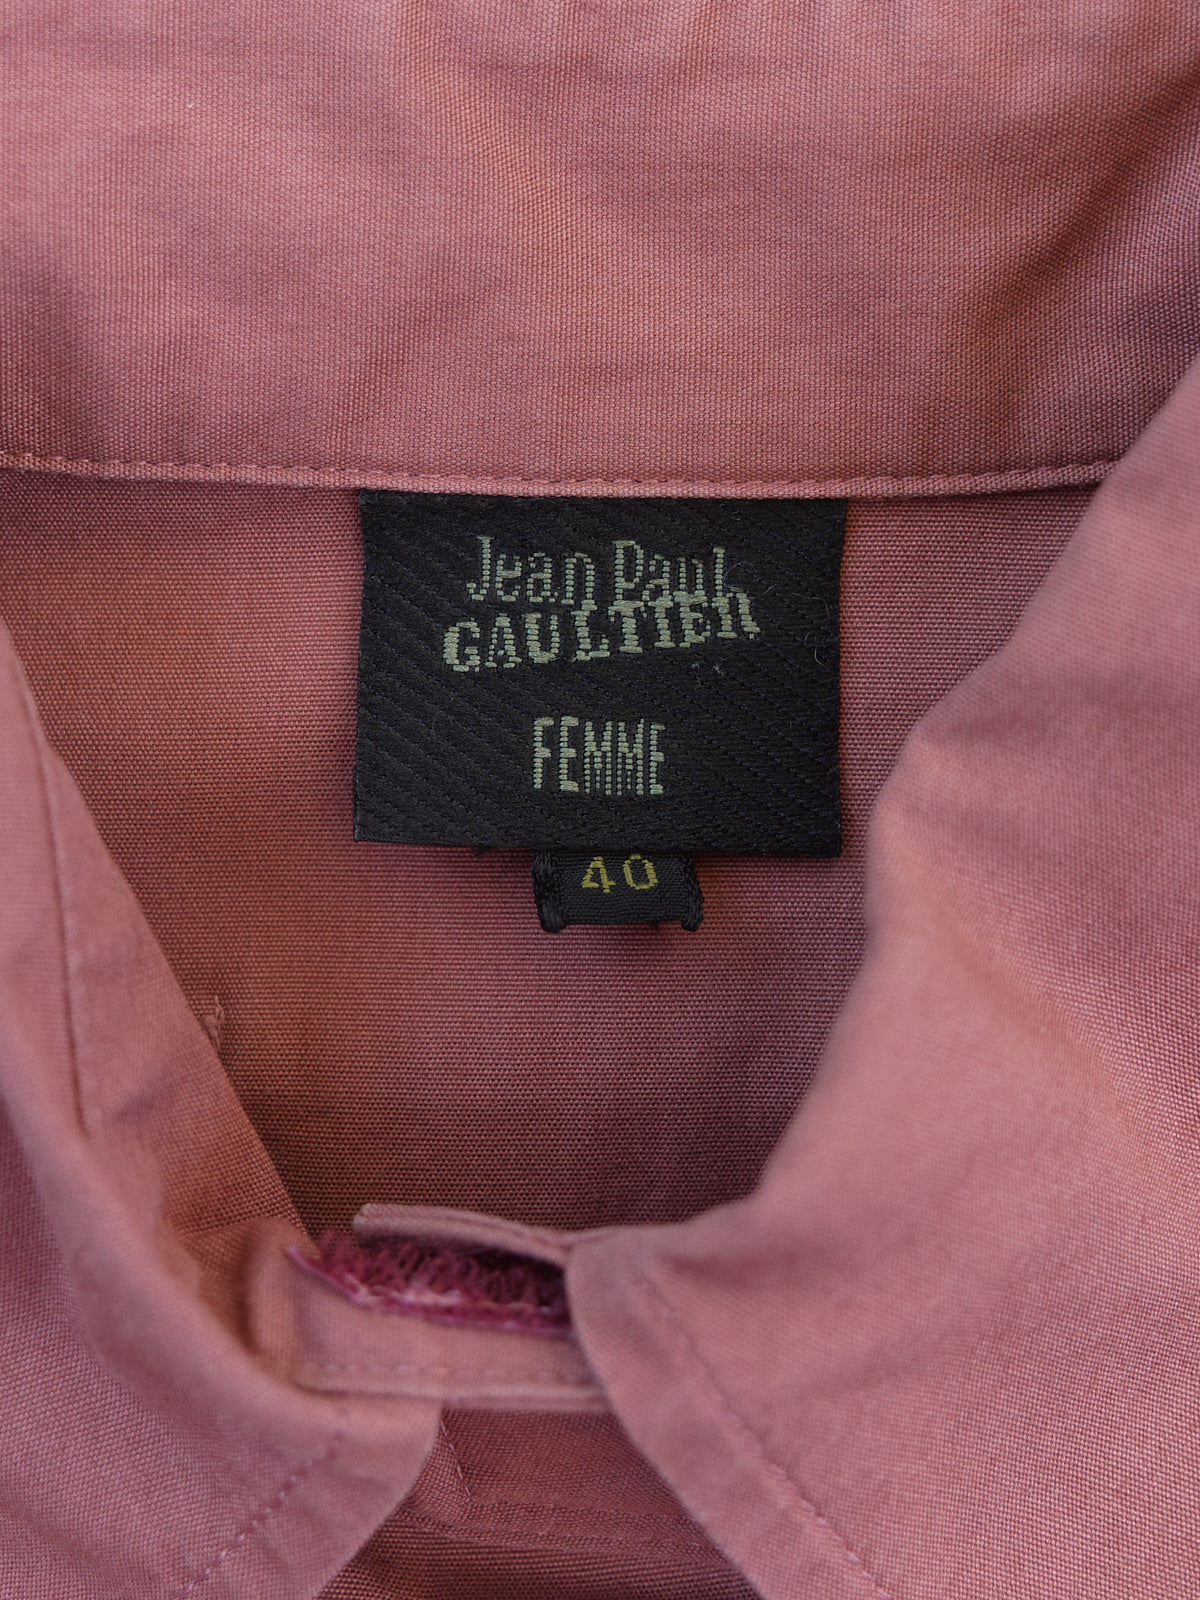 Jean Paul Gaultier Femme salmon cotton velcro placket shirt - womens 40 38